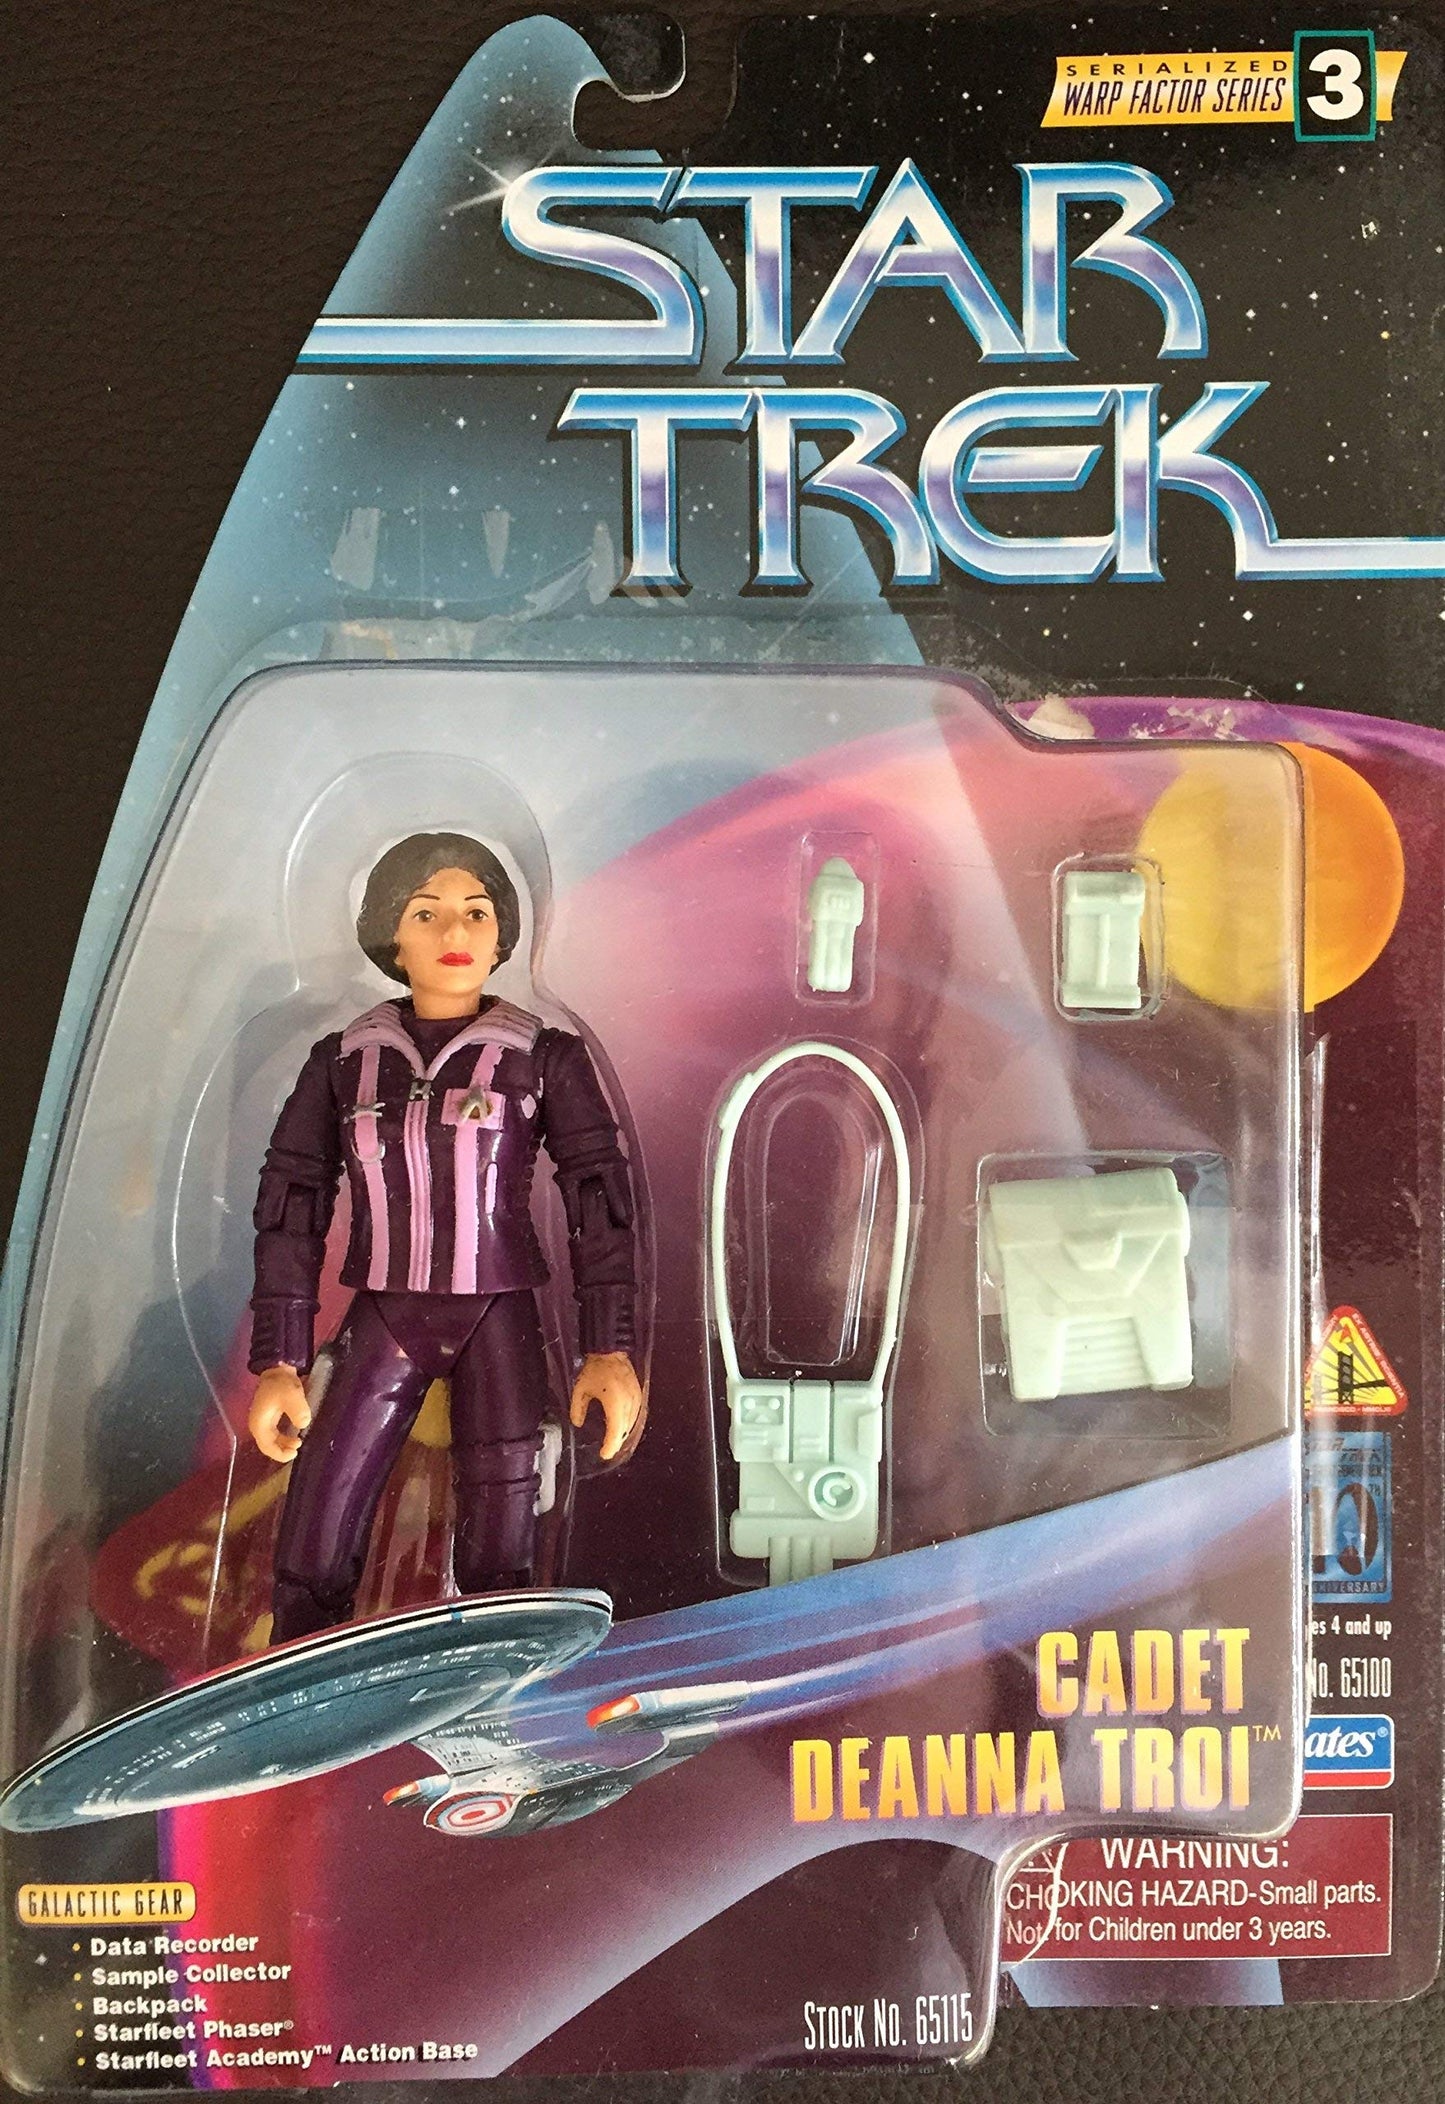 Vintage 1997 Star Trek Warp Factor Series 3 Cadet Deanna Troi Action Figure - Brand New Factory Sealed Shop Stock Room Find